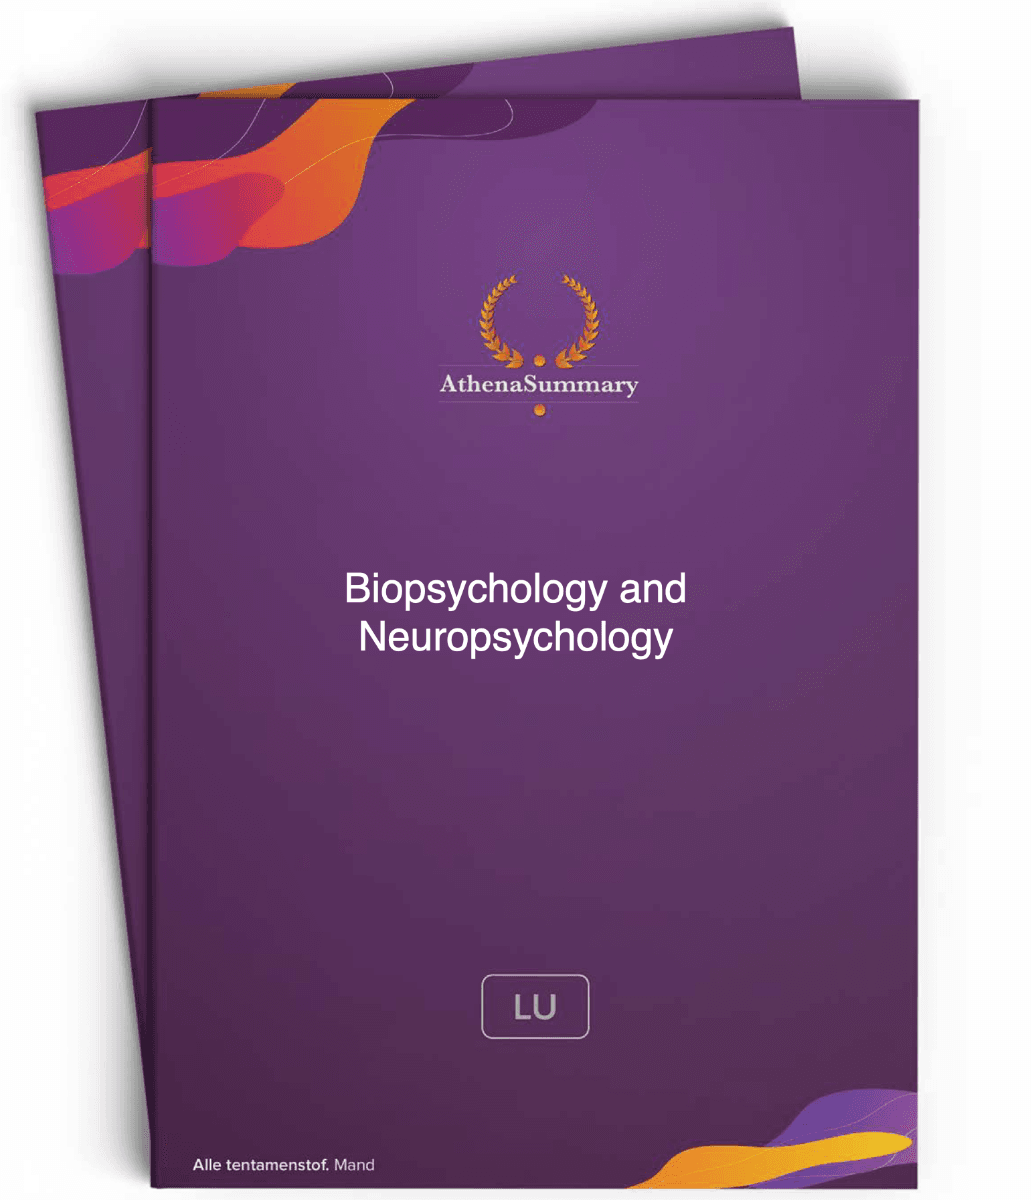 Literature Summary - Biopsychology and Neuropsychology